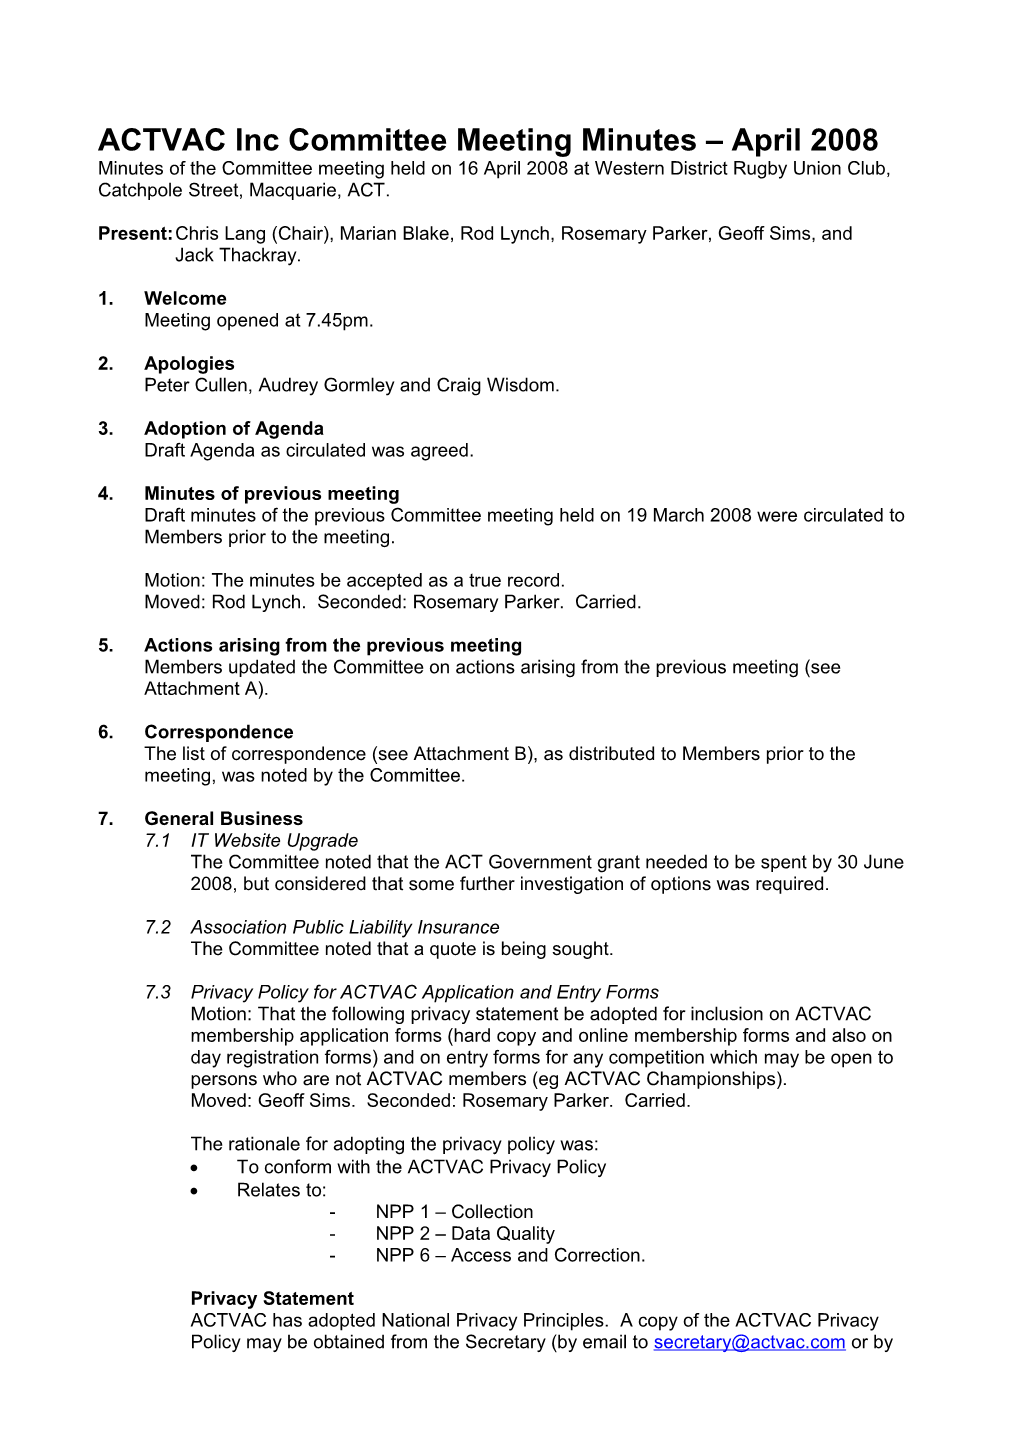 ACTVAC Inc Committee Meeting Minutes April 2008